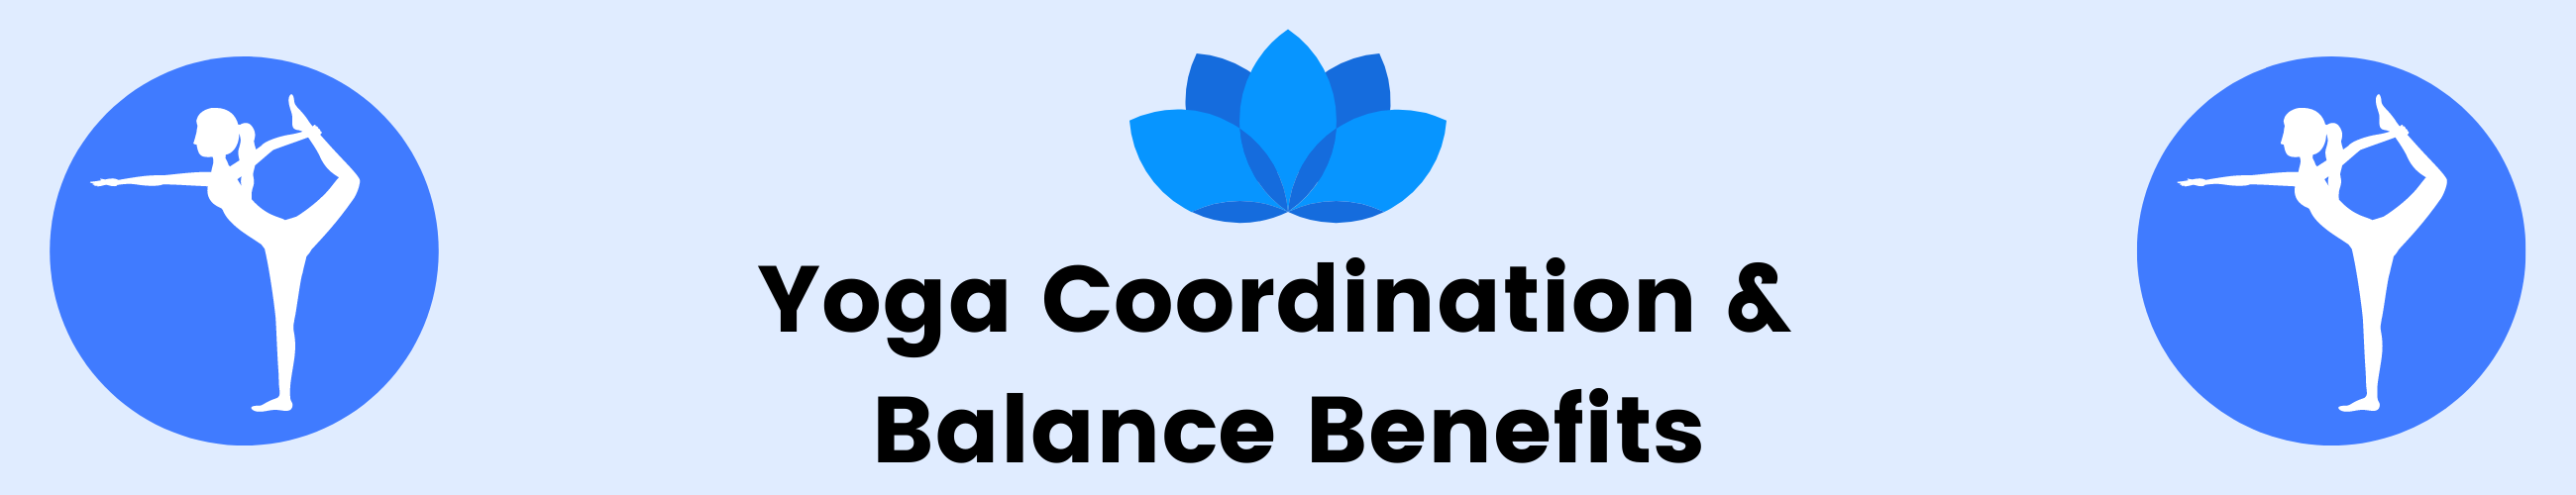 Yoga Coordination and Balance Benefits